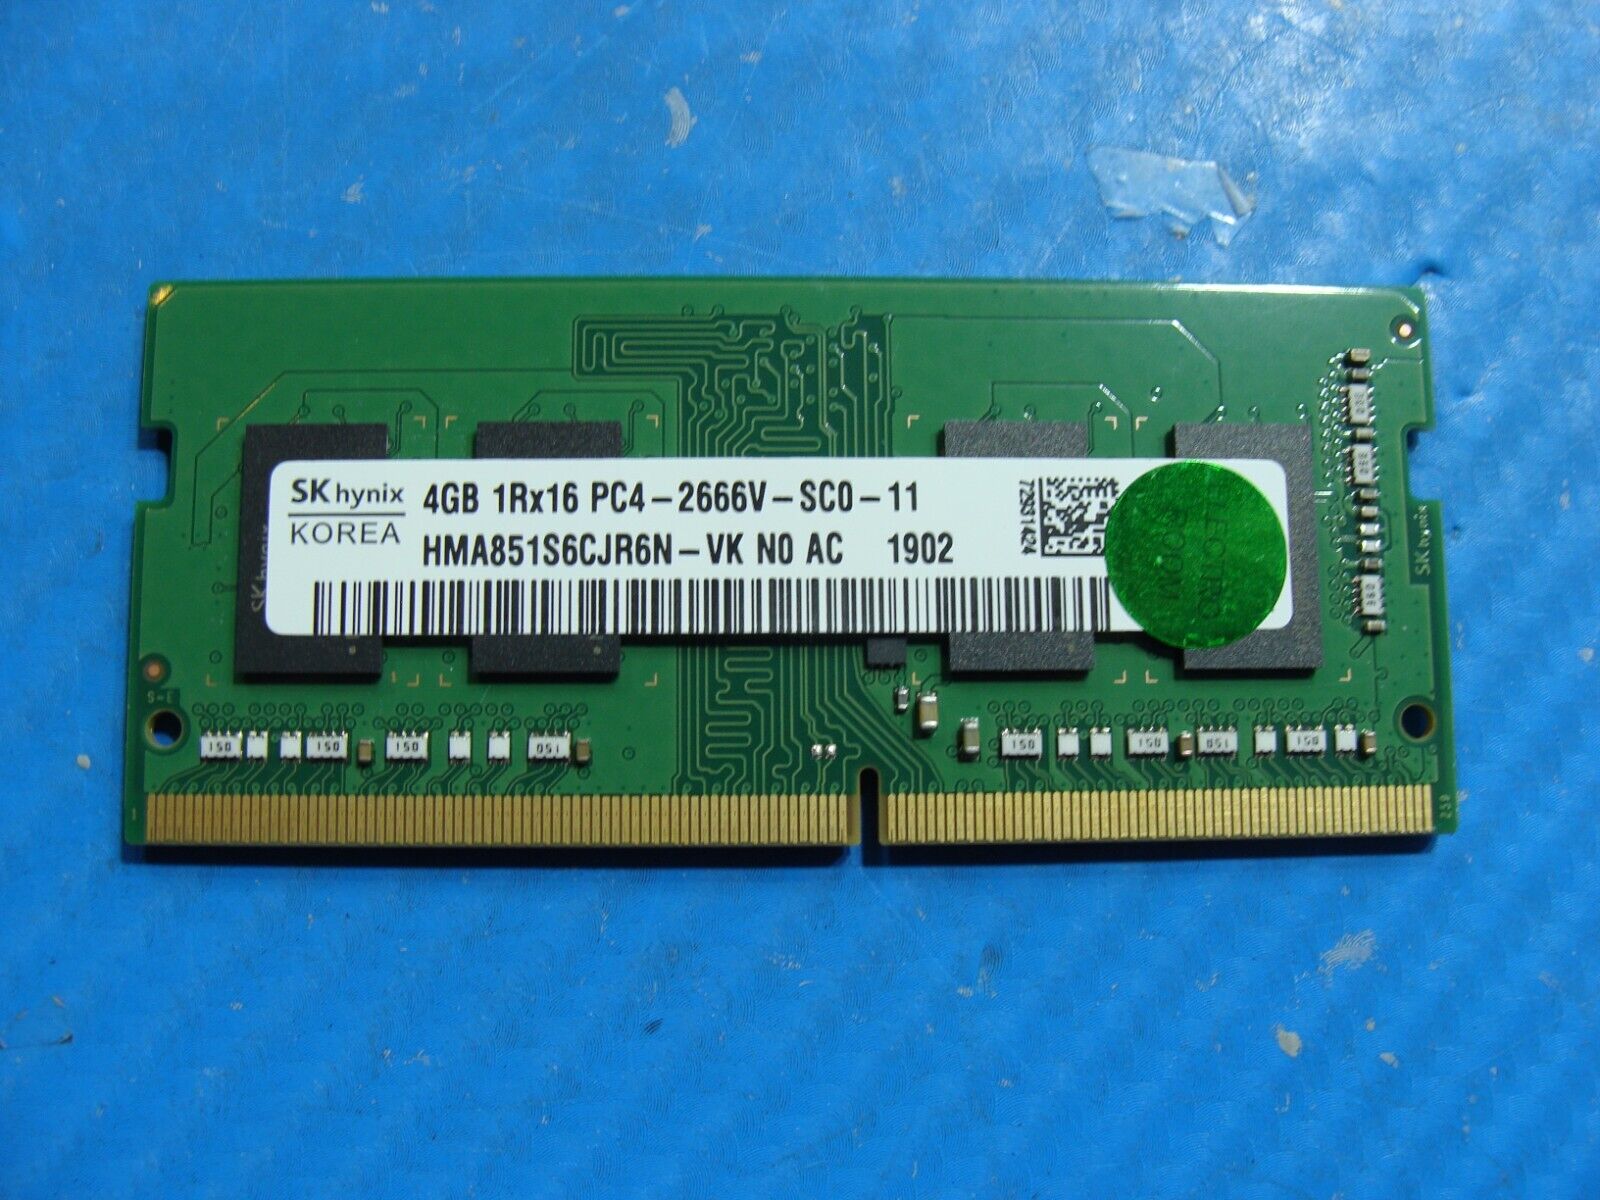 Dell G5 5590 SK Hynix 4GB 1Rx16 PC4-2666V SO-DIMM Memory RAM HMA851S6C